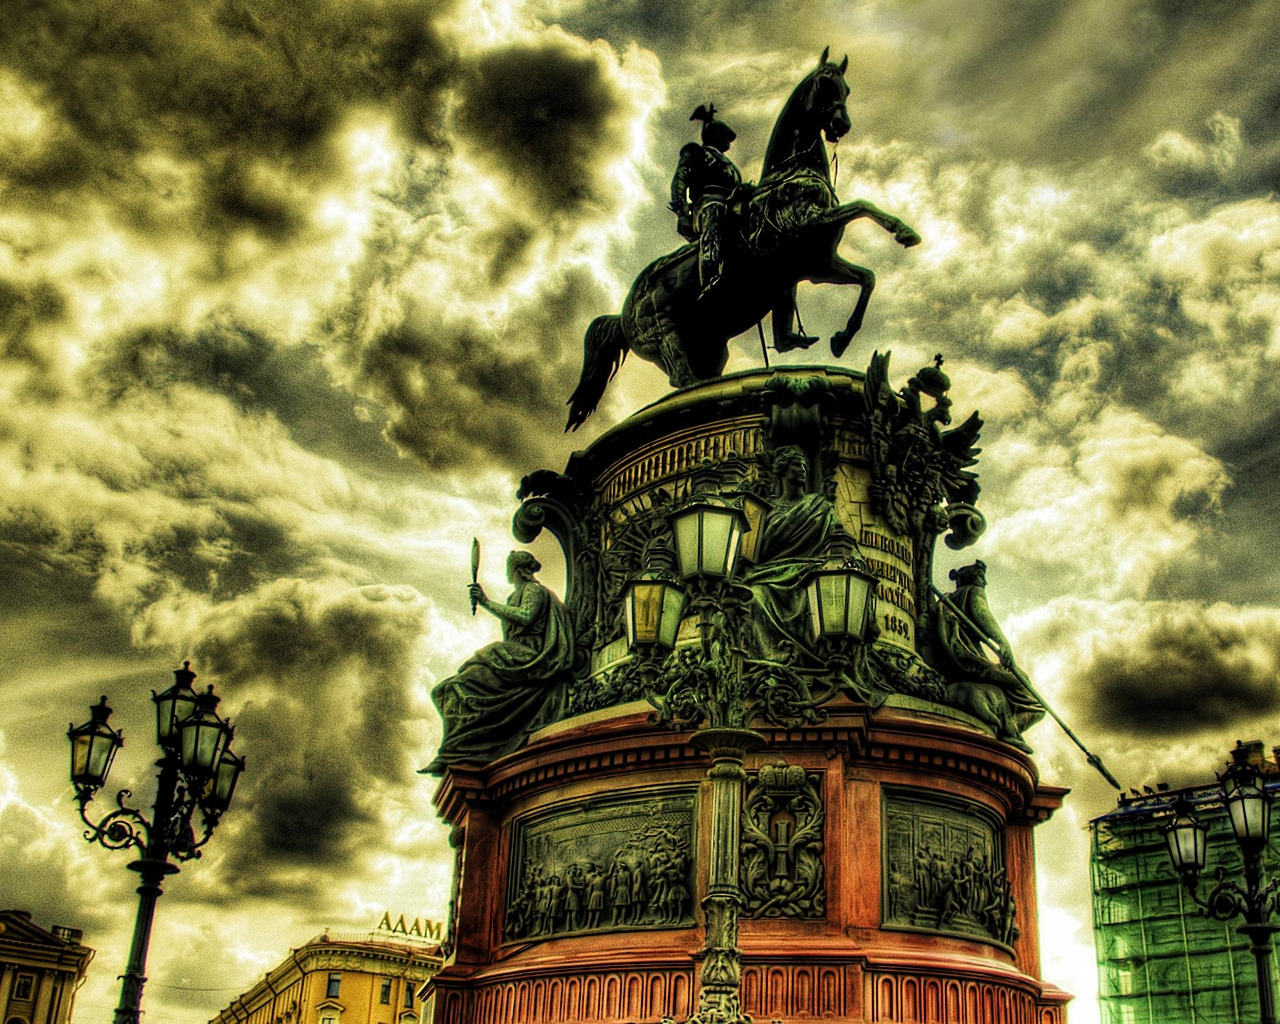 Bronze Horseman St Petersburg for 1280 x 1024 resolution